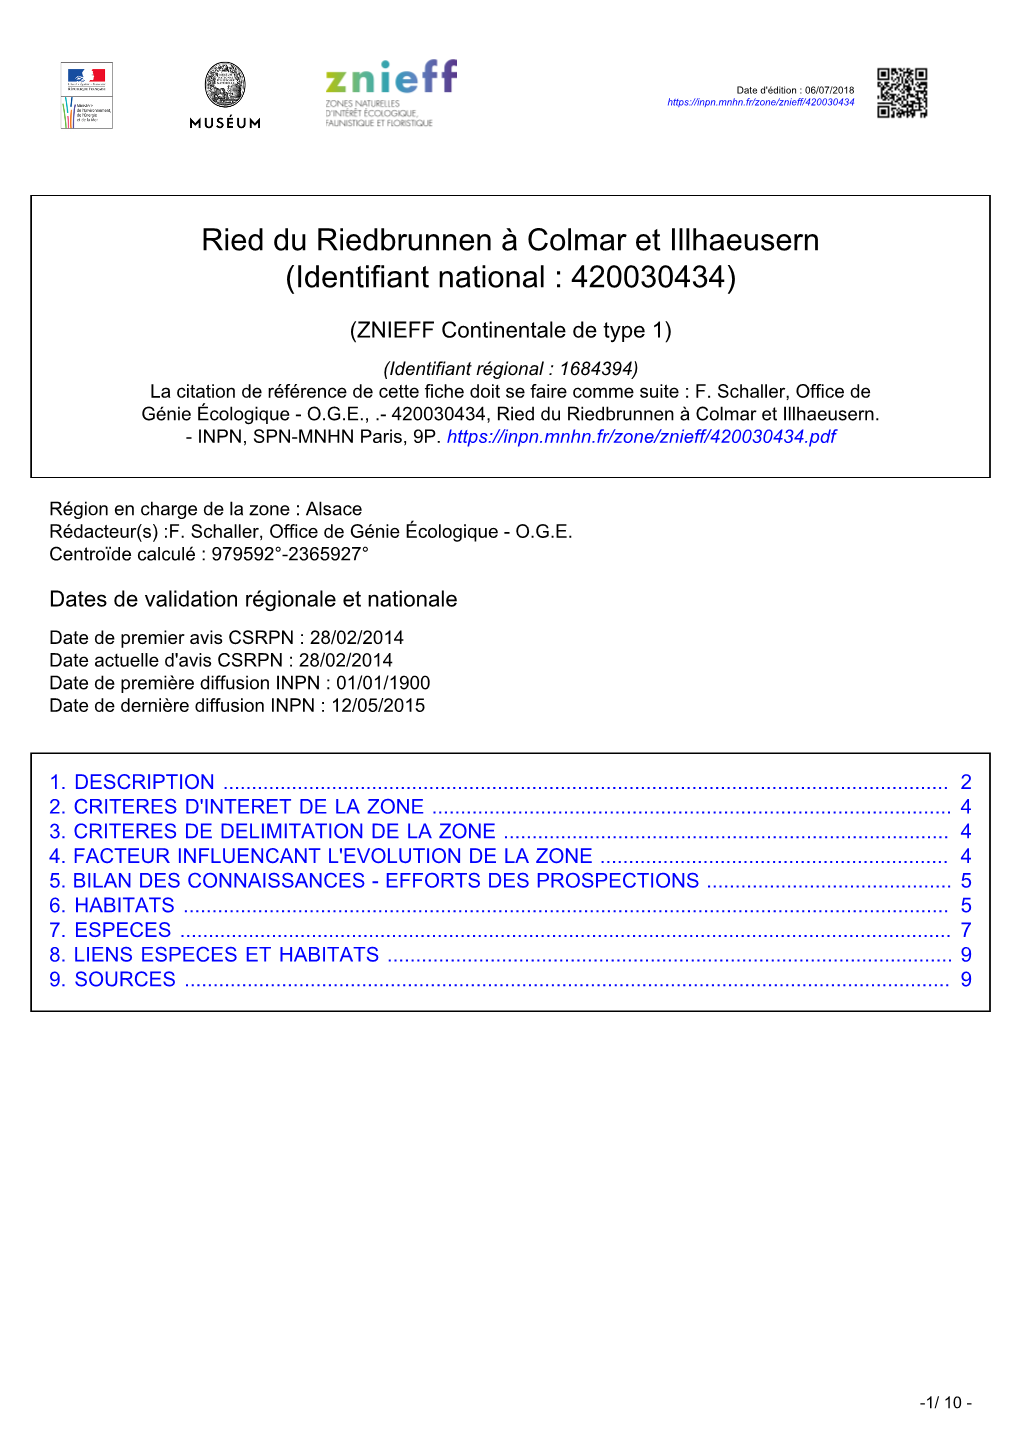 Ried Du Riedbrunnen À Colmar Et Illhaeusern (Identifiant National : 420030434)